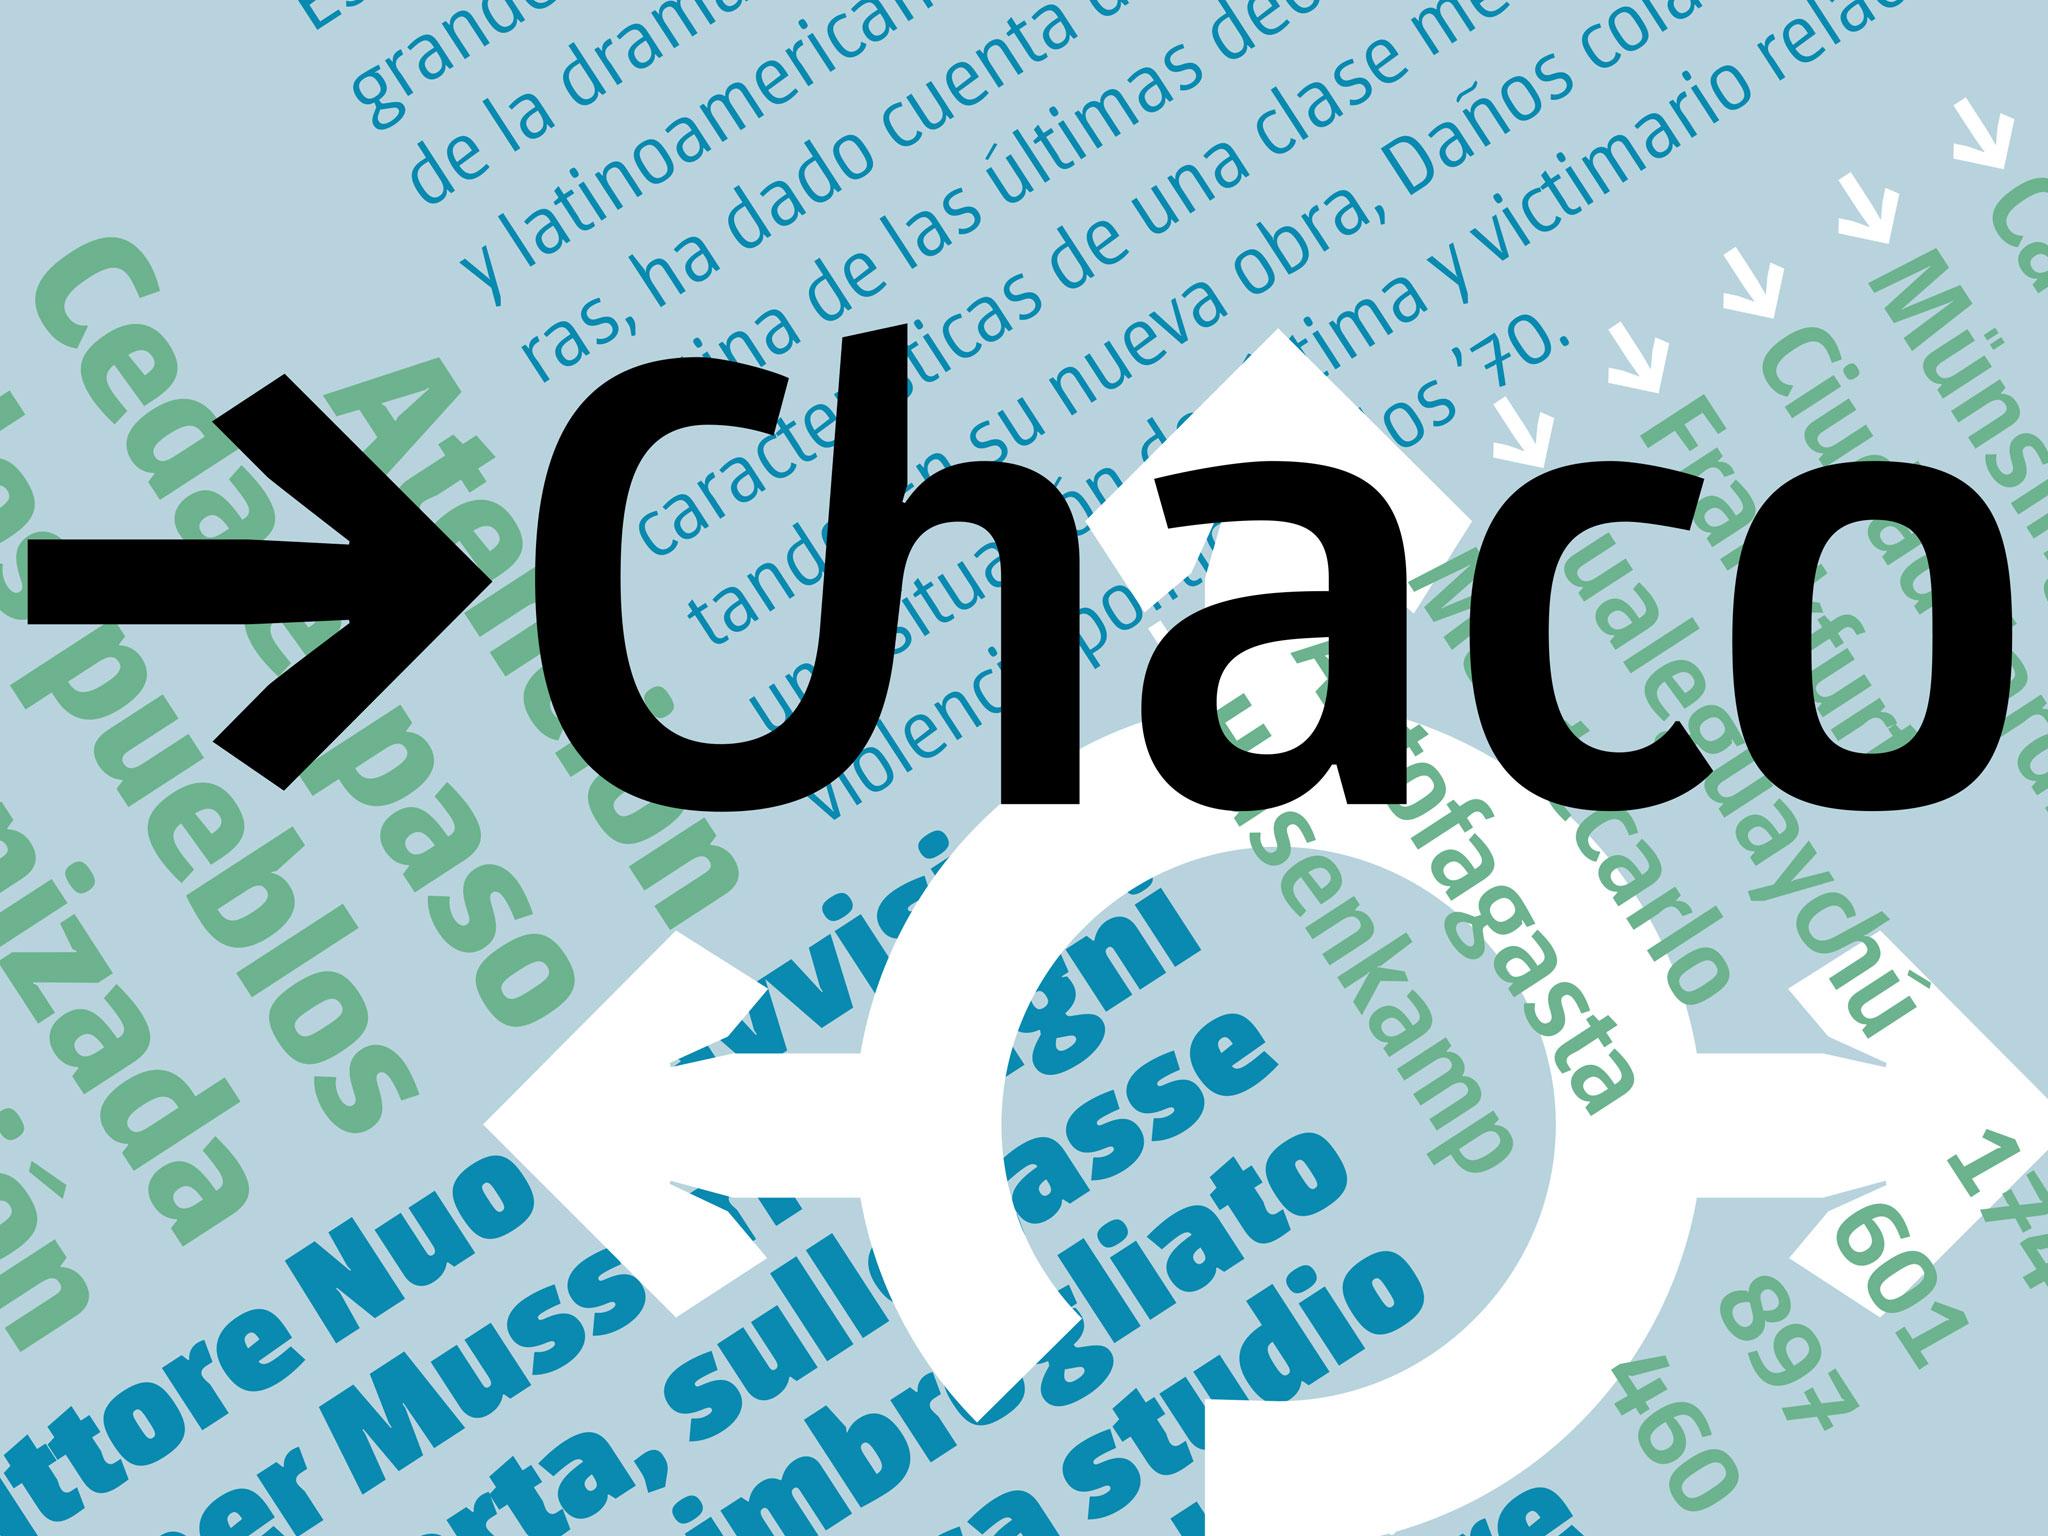 Tipografia Chaco